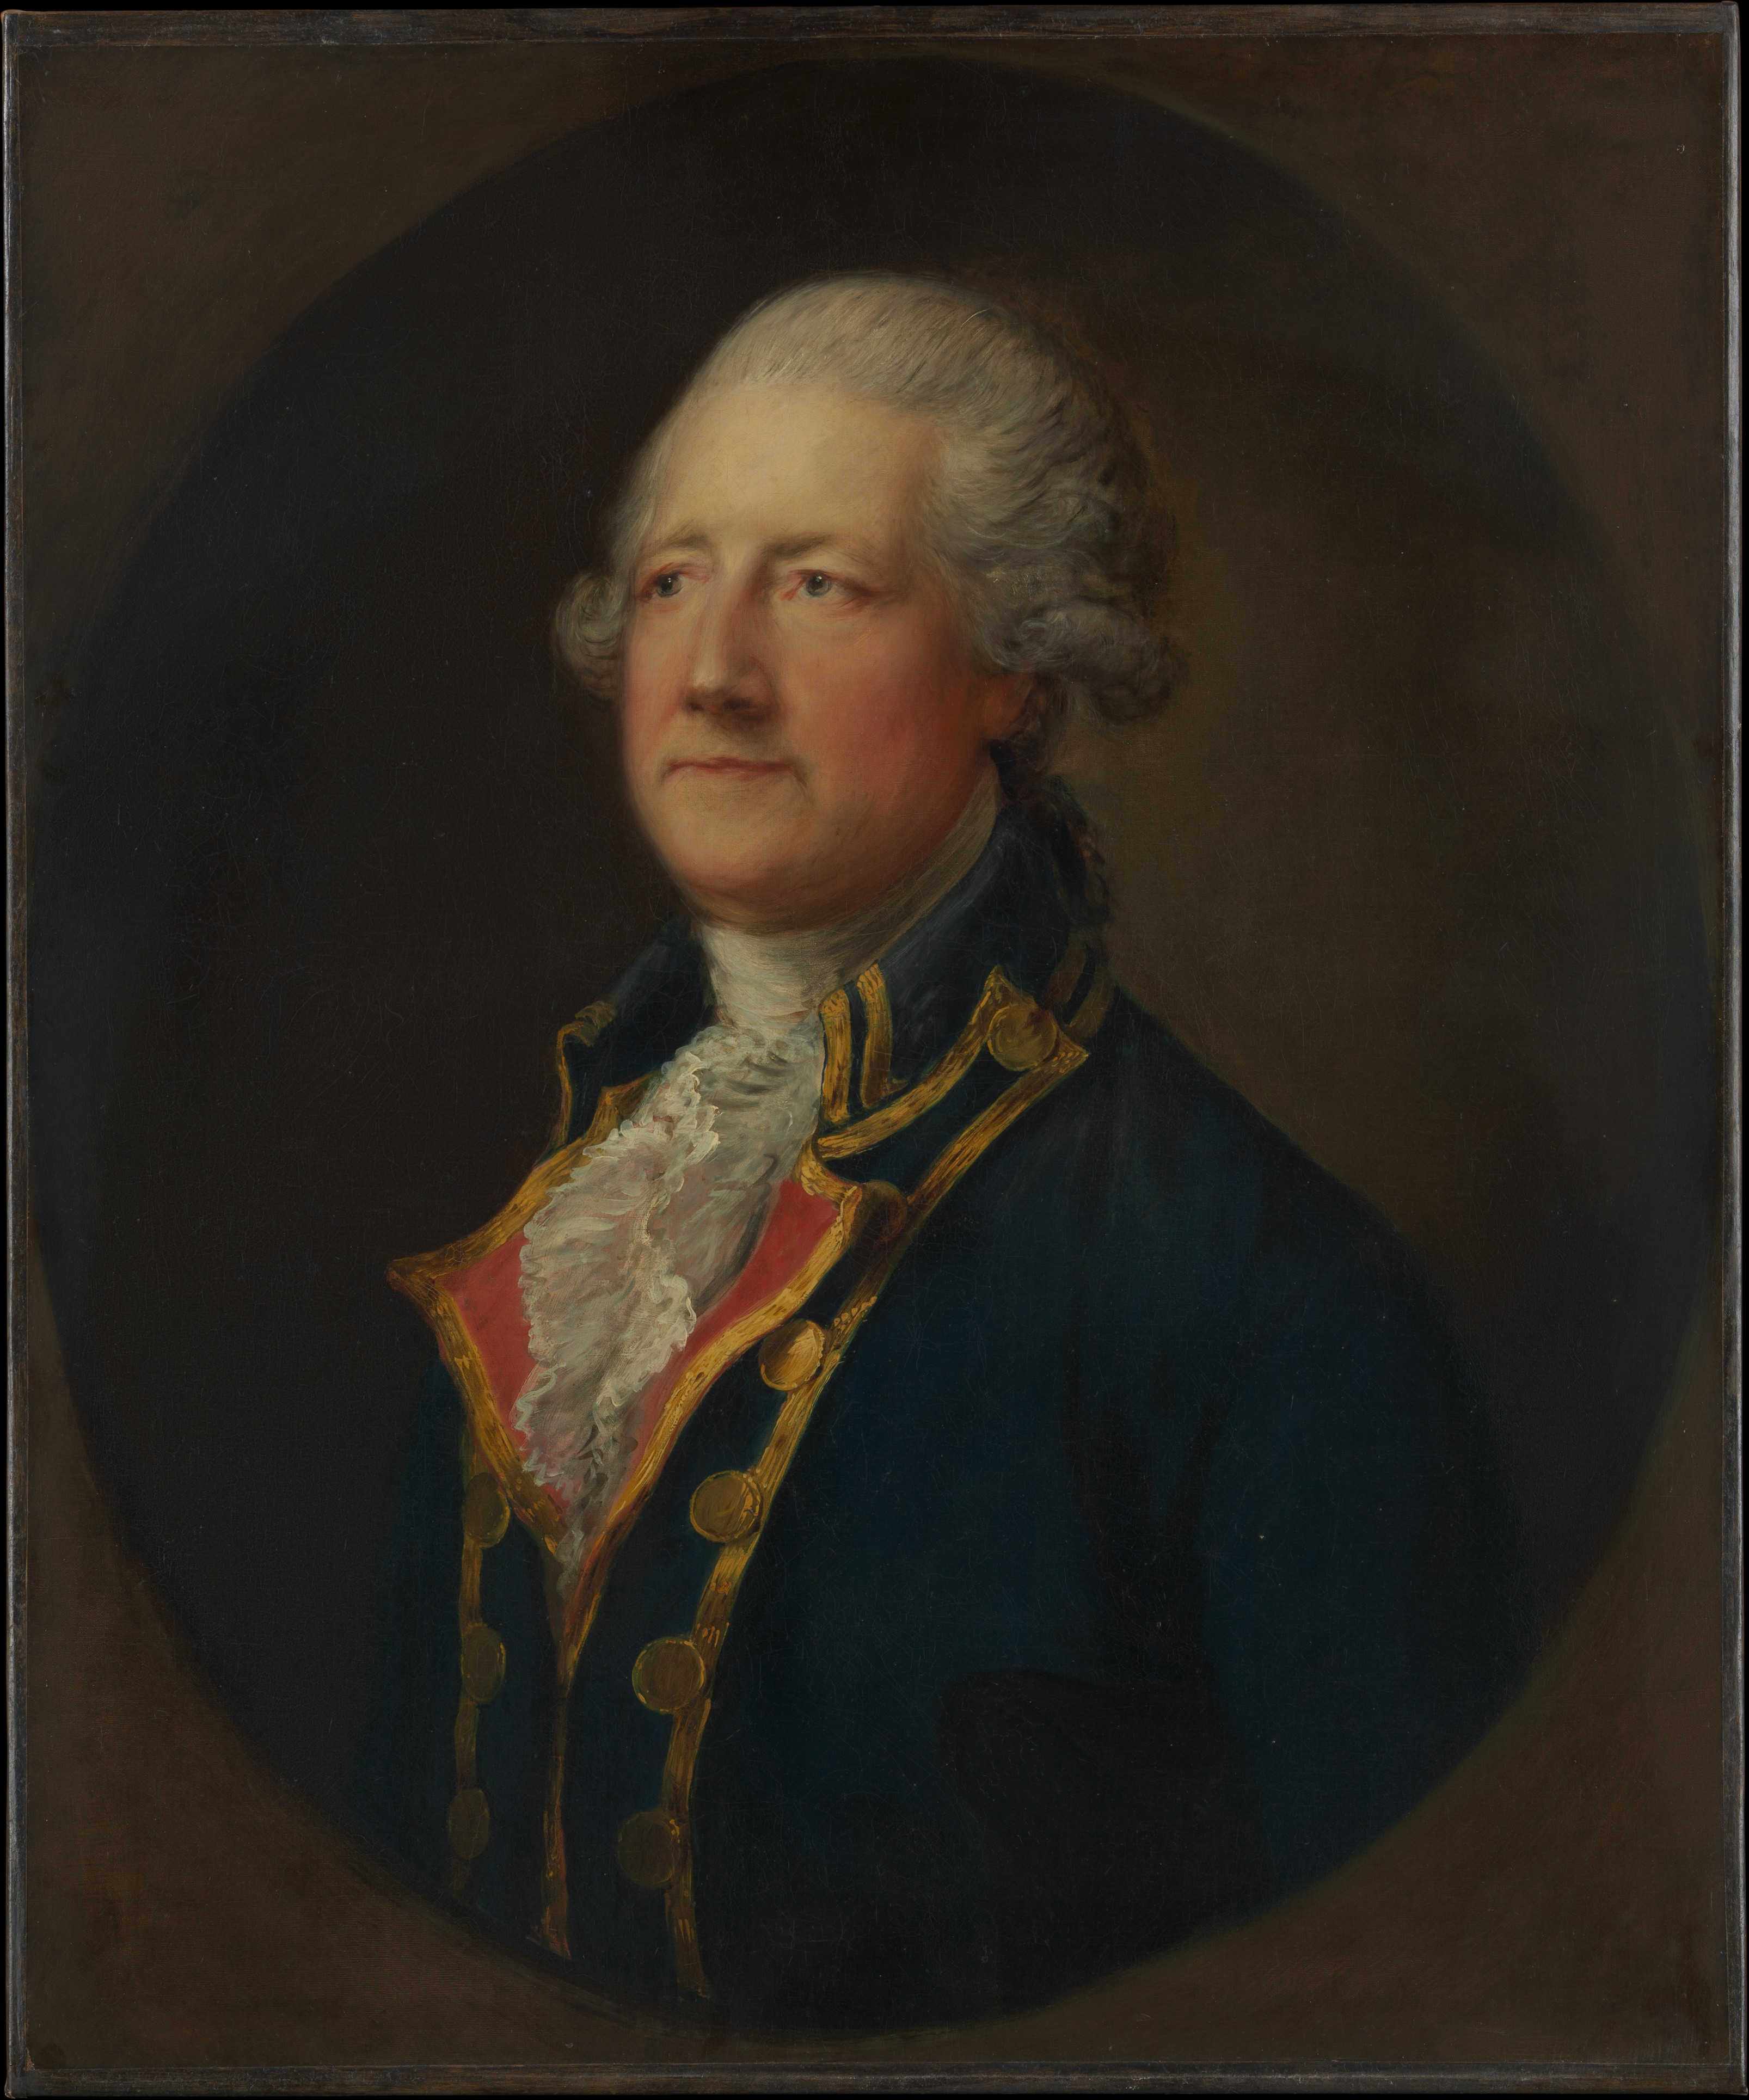 John Hobart by Thomas Gainsborough - 1780 - 74.9 x 62.9 cm 